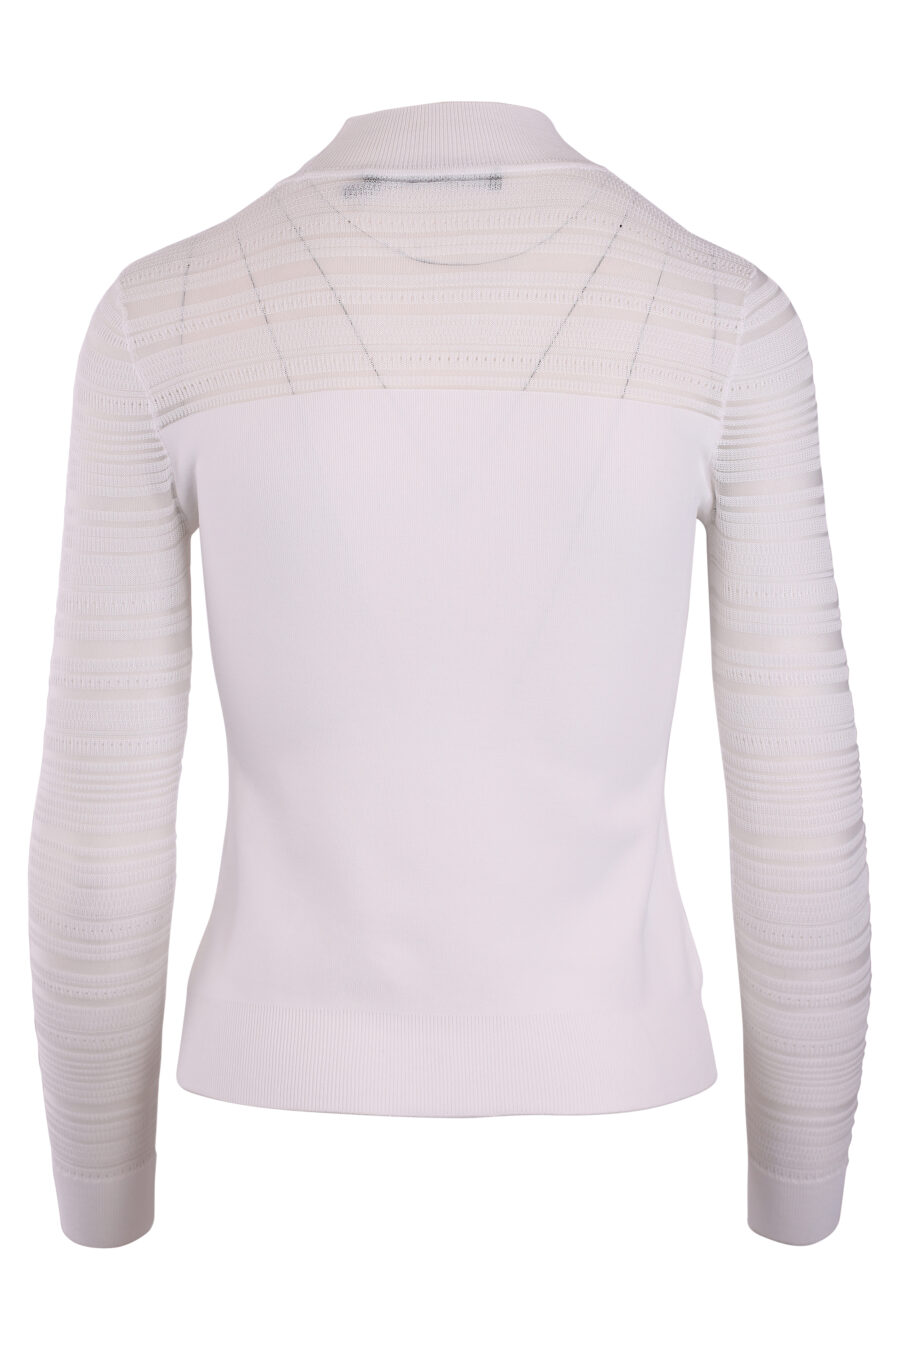 Camiseta blanca manga larga semitransparente - IMG 3262